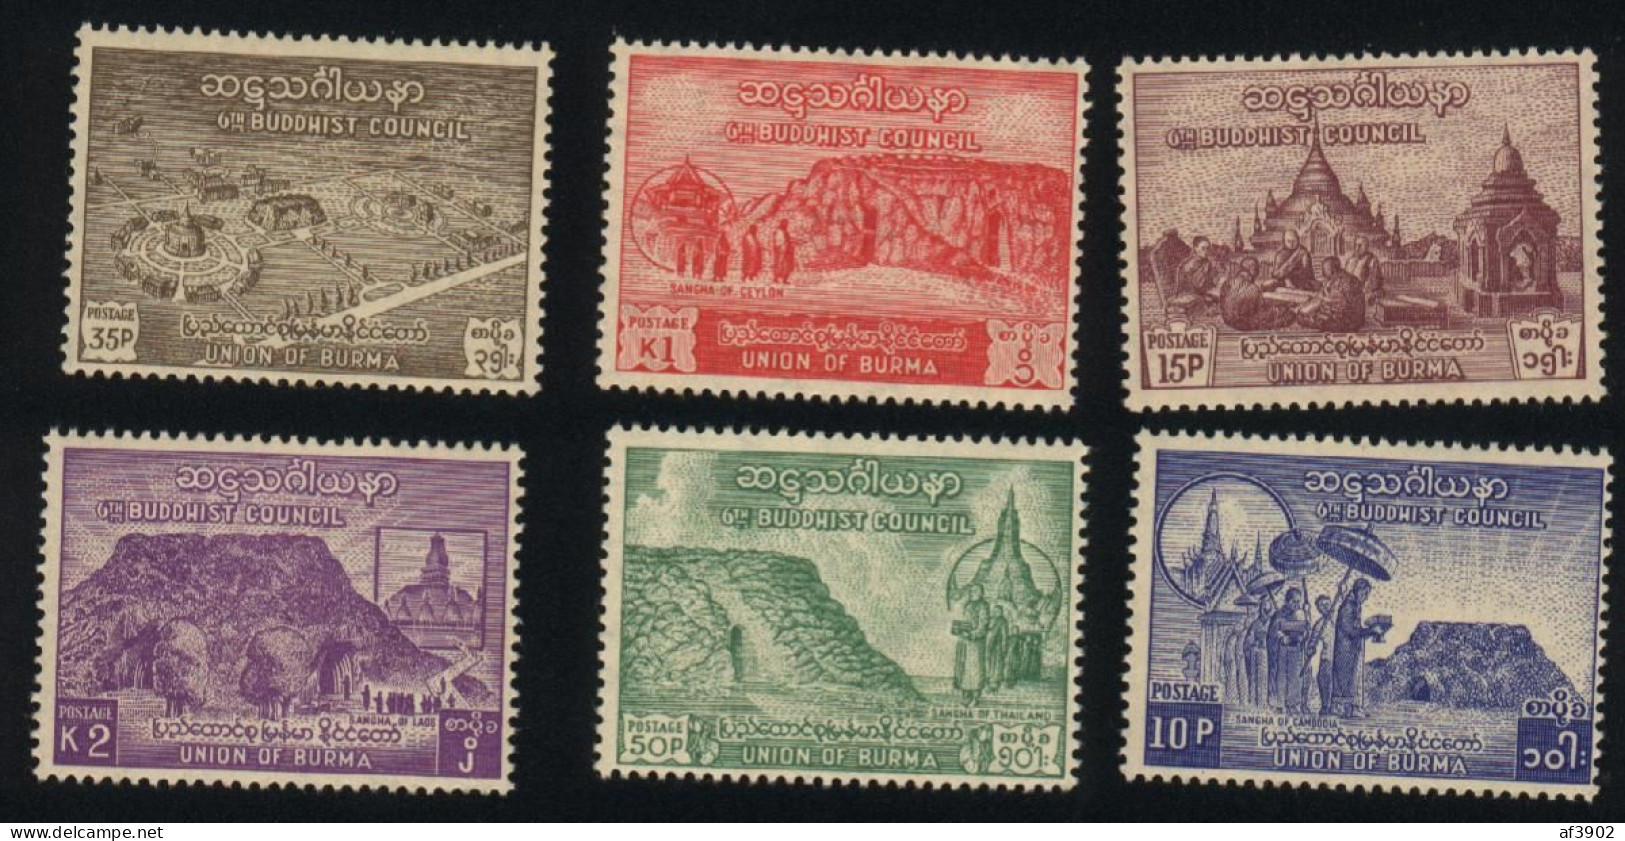 BURMA/MYANMAR STAMP 1954 ISSUED 6TH BUDDHA SEMINAR COMPLETE SET, MNH - Myanmar (Birmanie 1948-...)